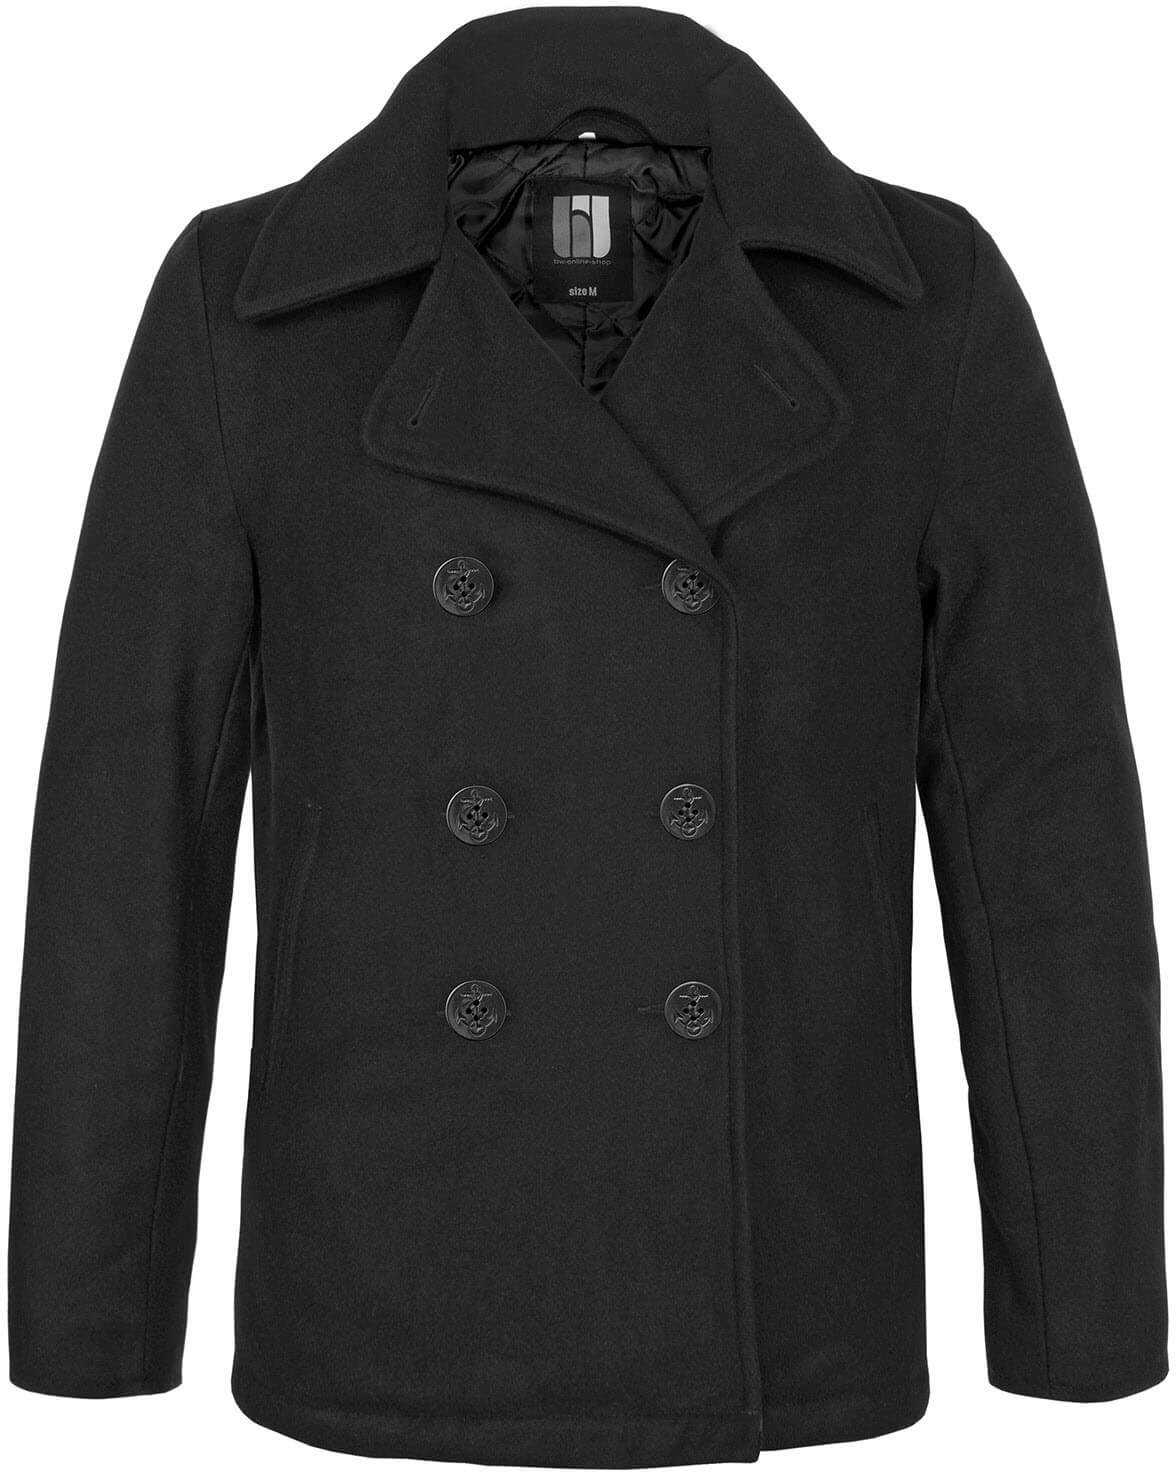 bw-online-shop Navy Pea Coat Mantel schwarz, Größe L